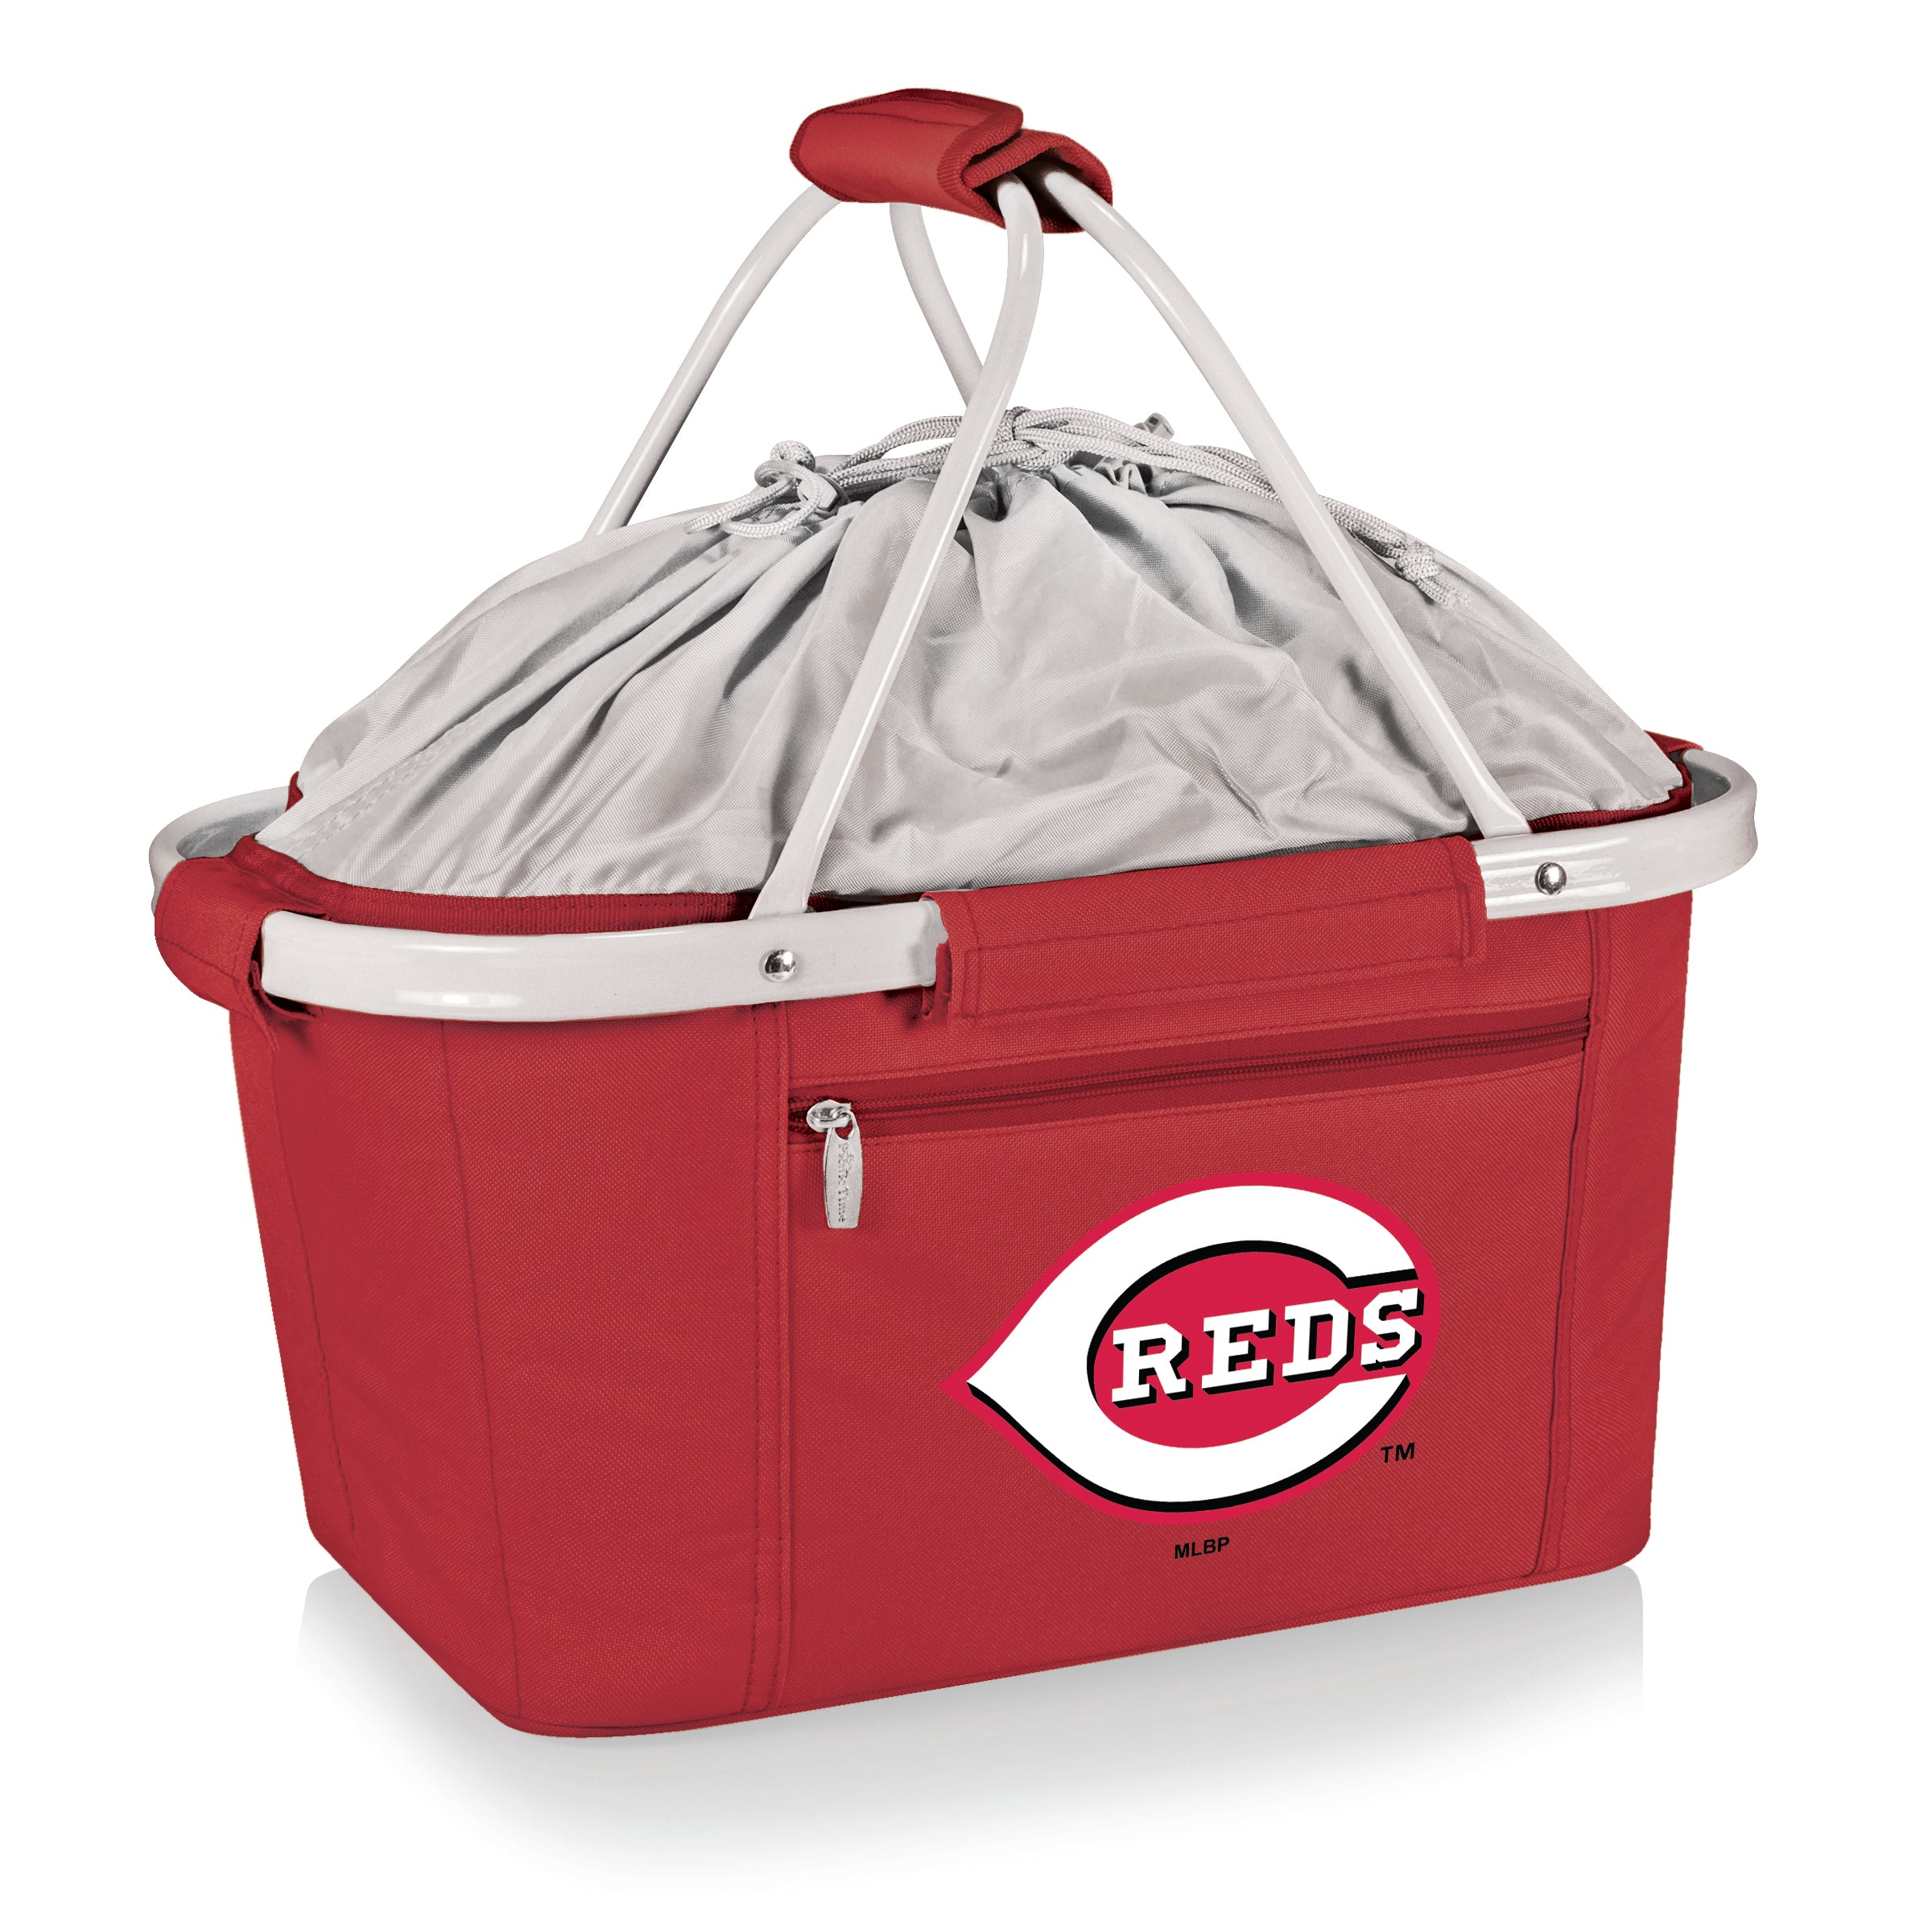 Cincinnati Reds - Metro Basket Collapsible Cooler Tote